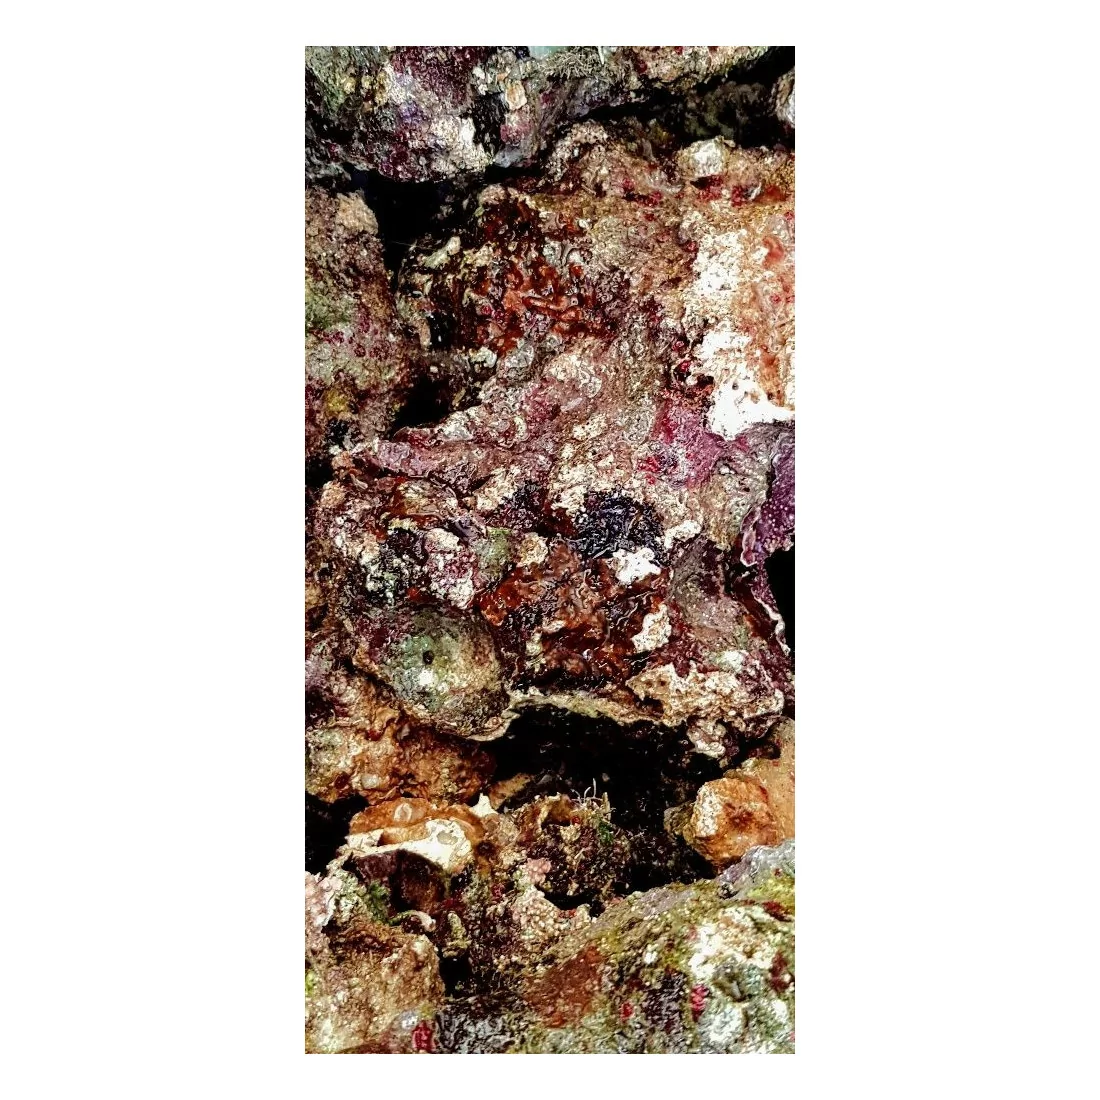 Living rocks (Caribbean) by kg